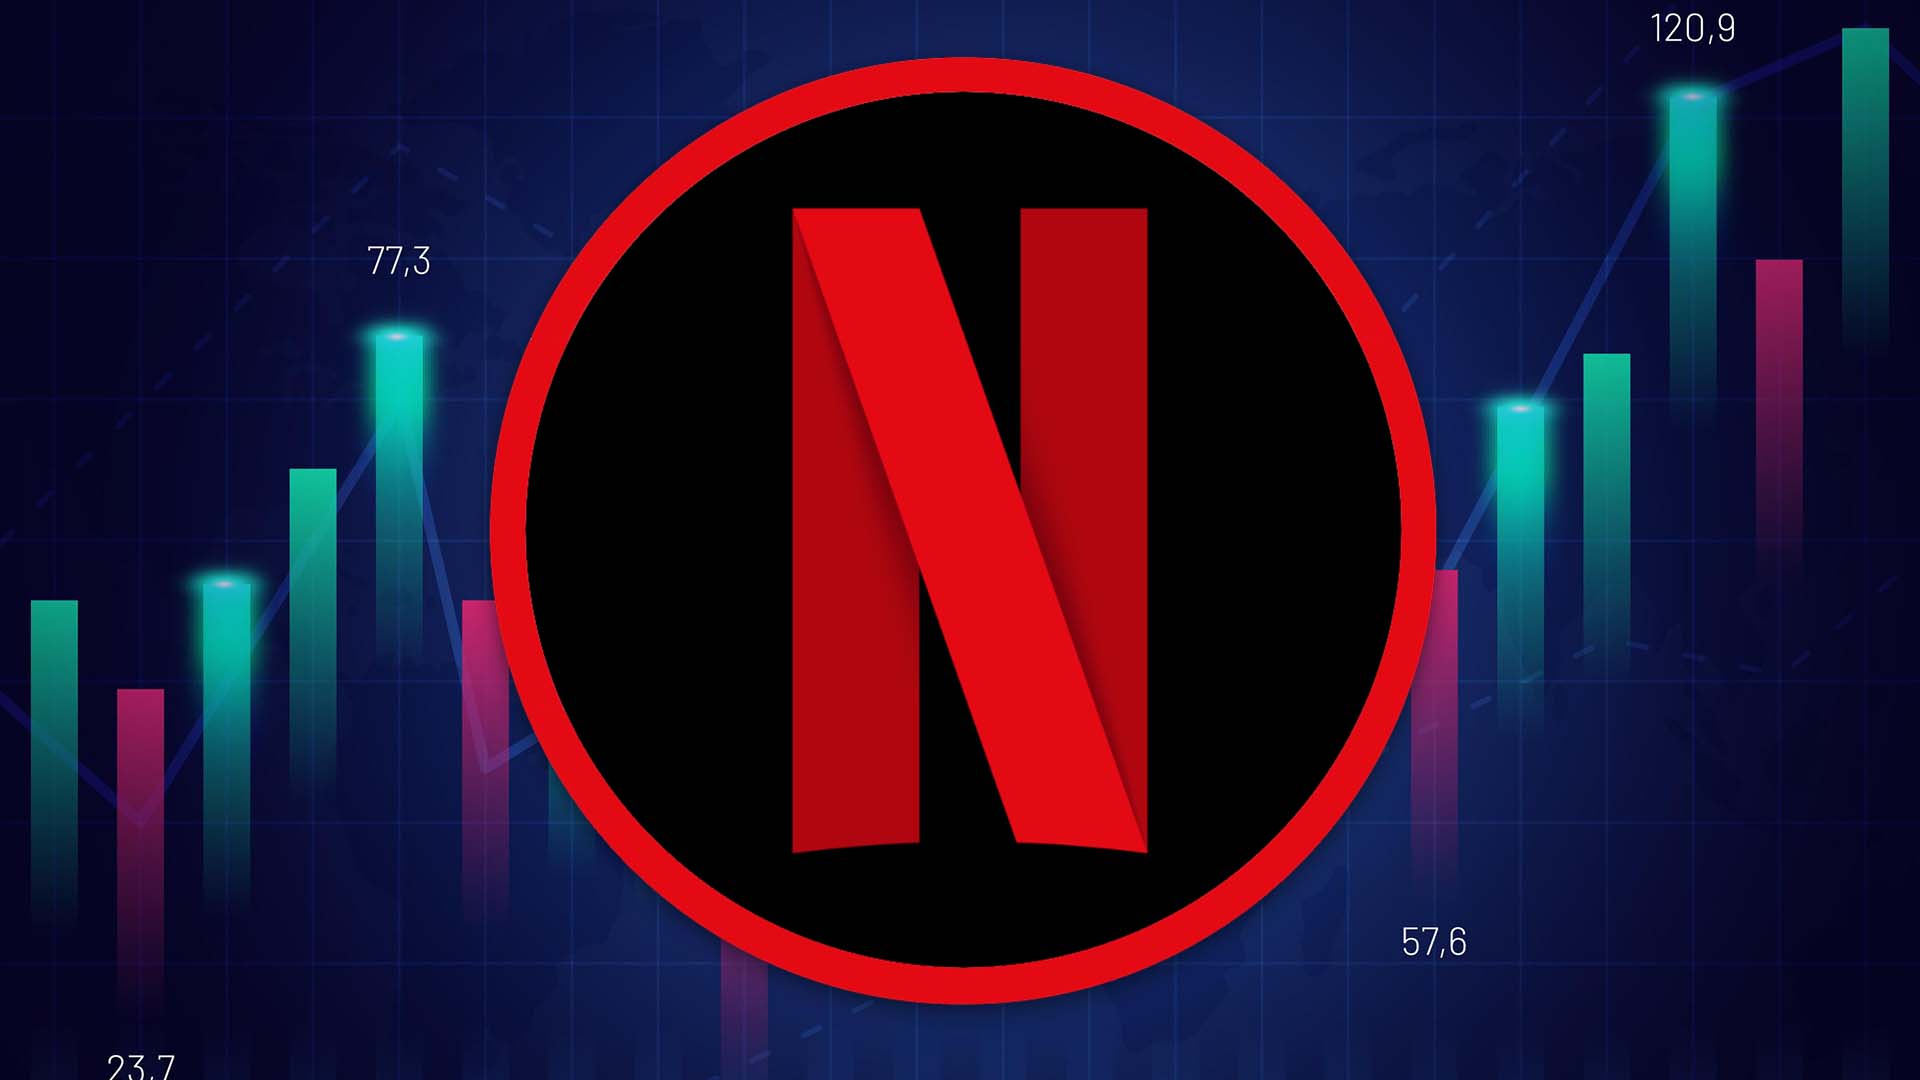 Netflix Stock Price Growth Making Investors ‘Chill’